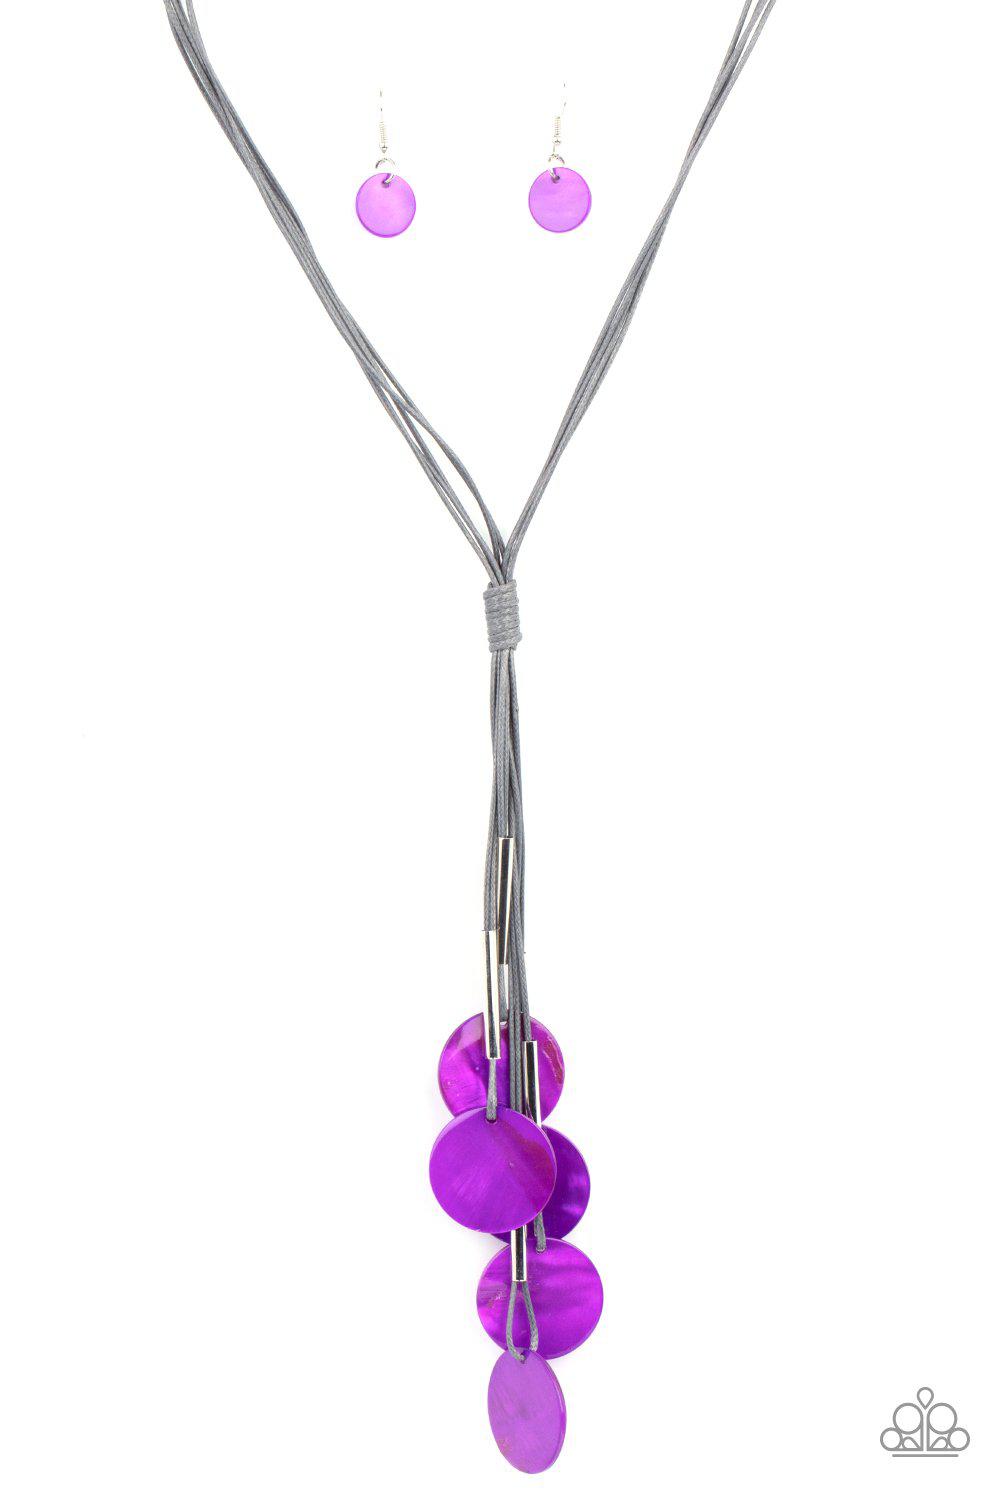 Tidal Tassels Purple and Gray Shell-like Tassel Necklace - Paparazzi Accessories- lightbox - CarasShop.com - $5 Jewelry by Cara Jewels